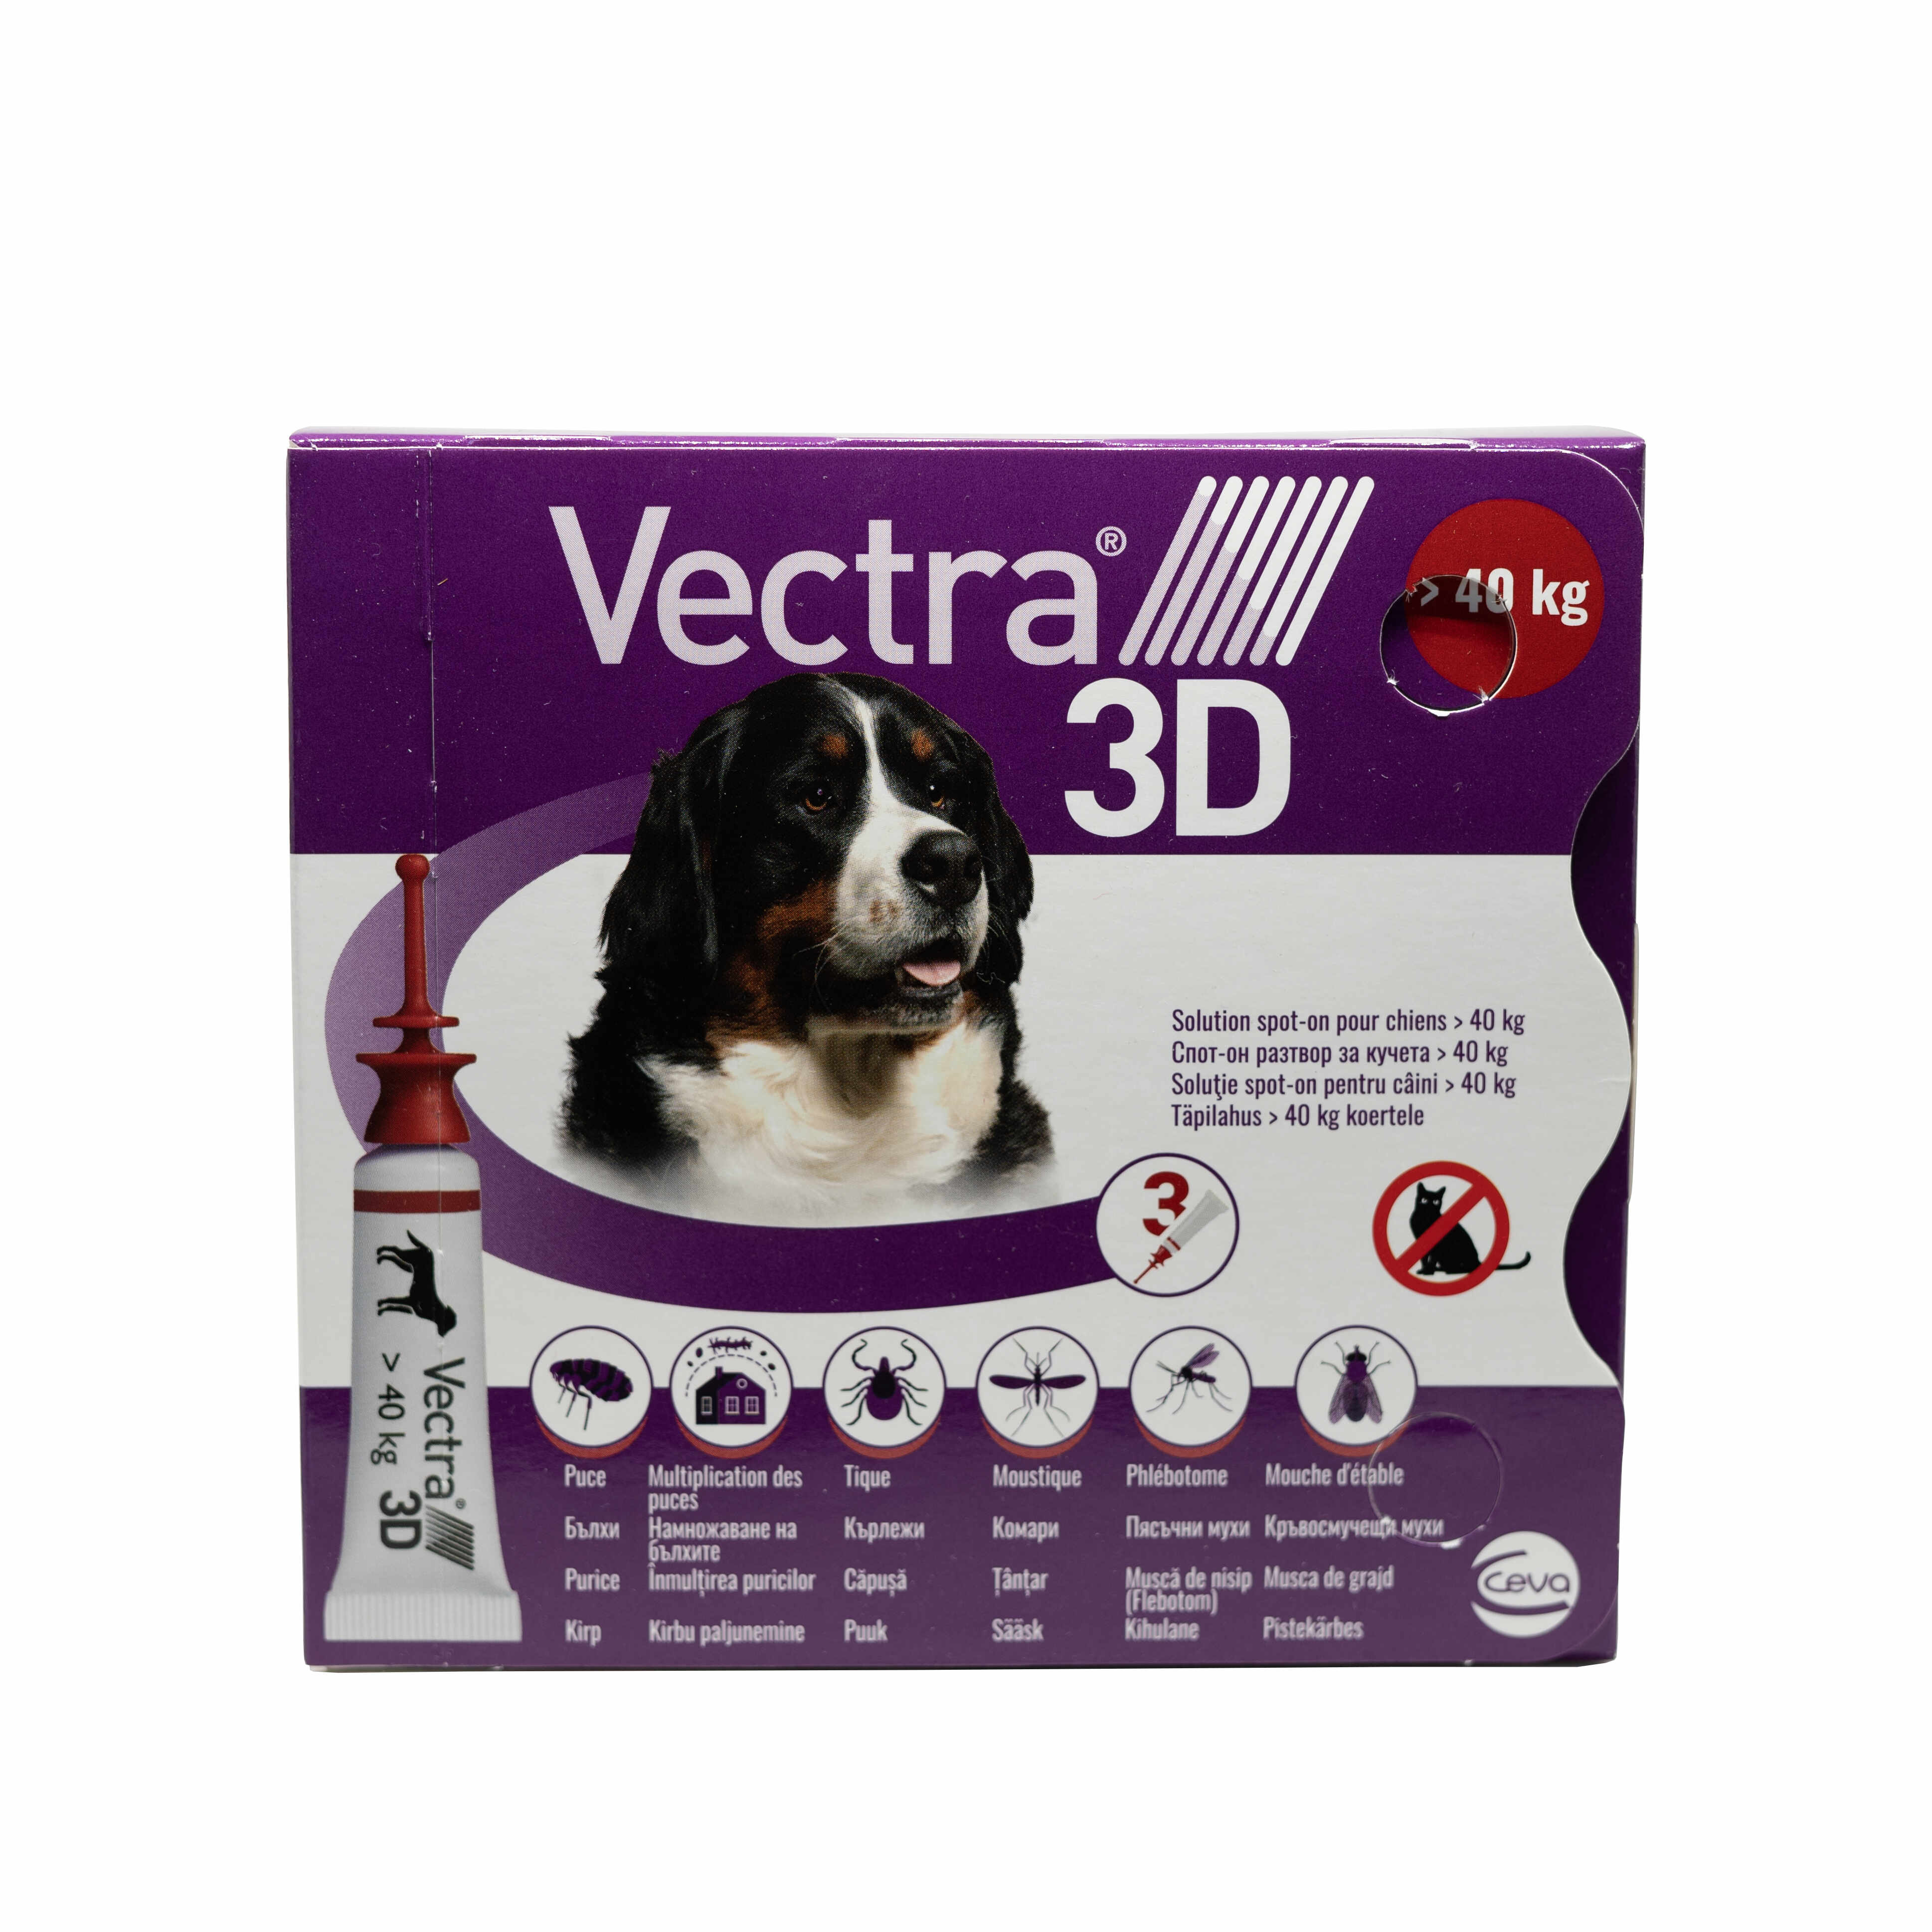 Pipeta antiparazitara vectra 3D pentru caini de +40kg